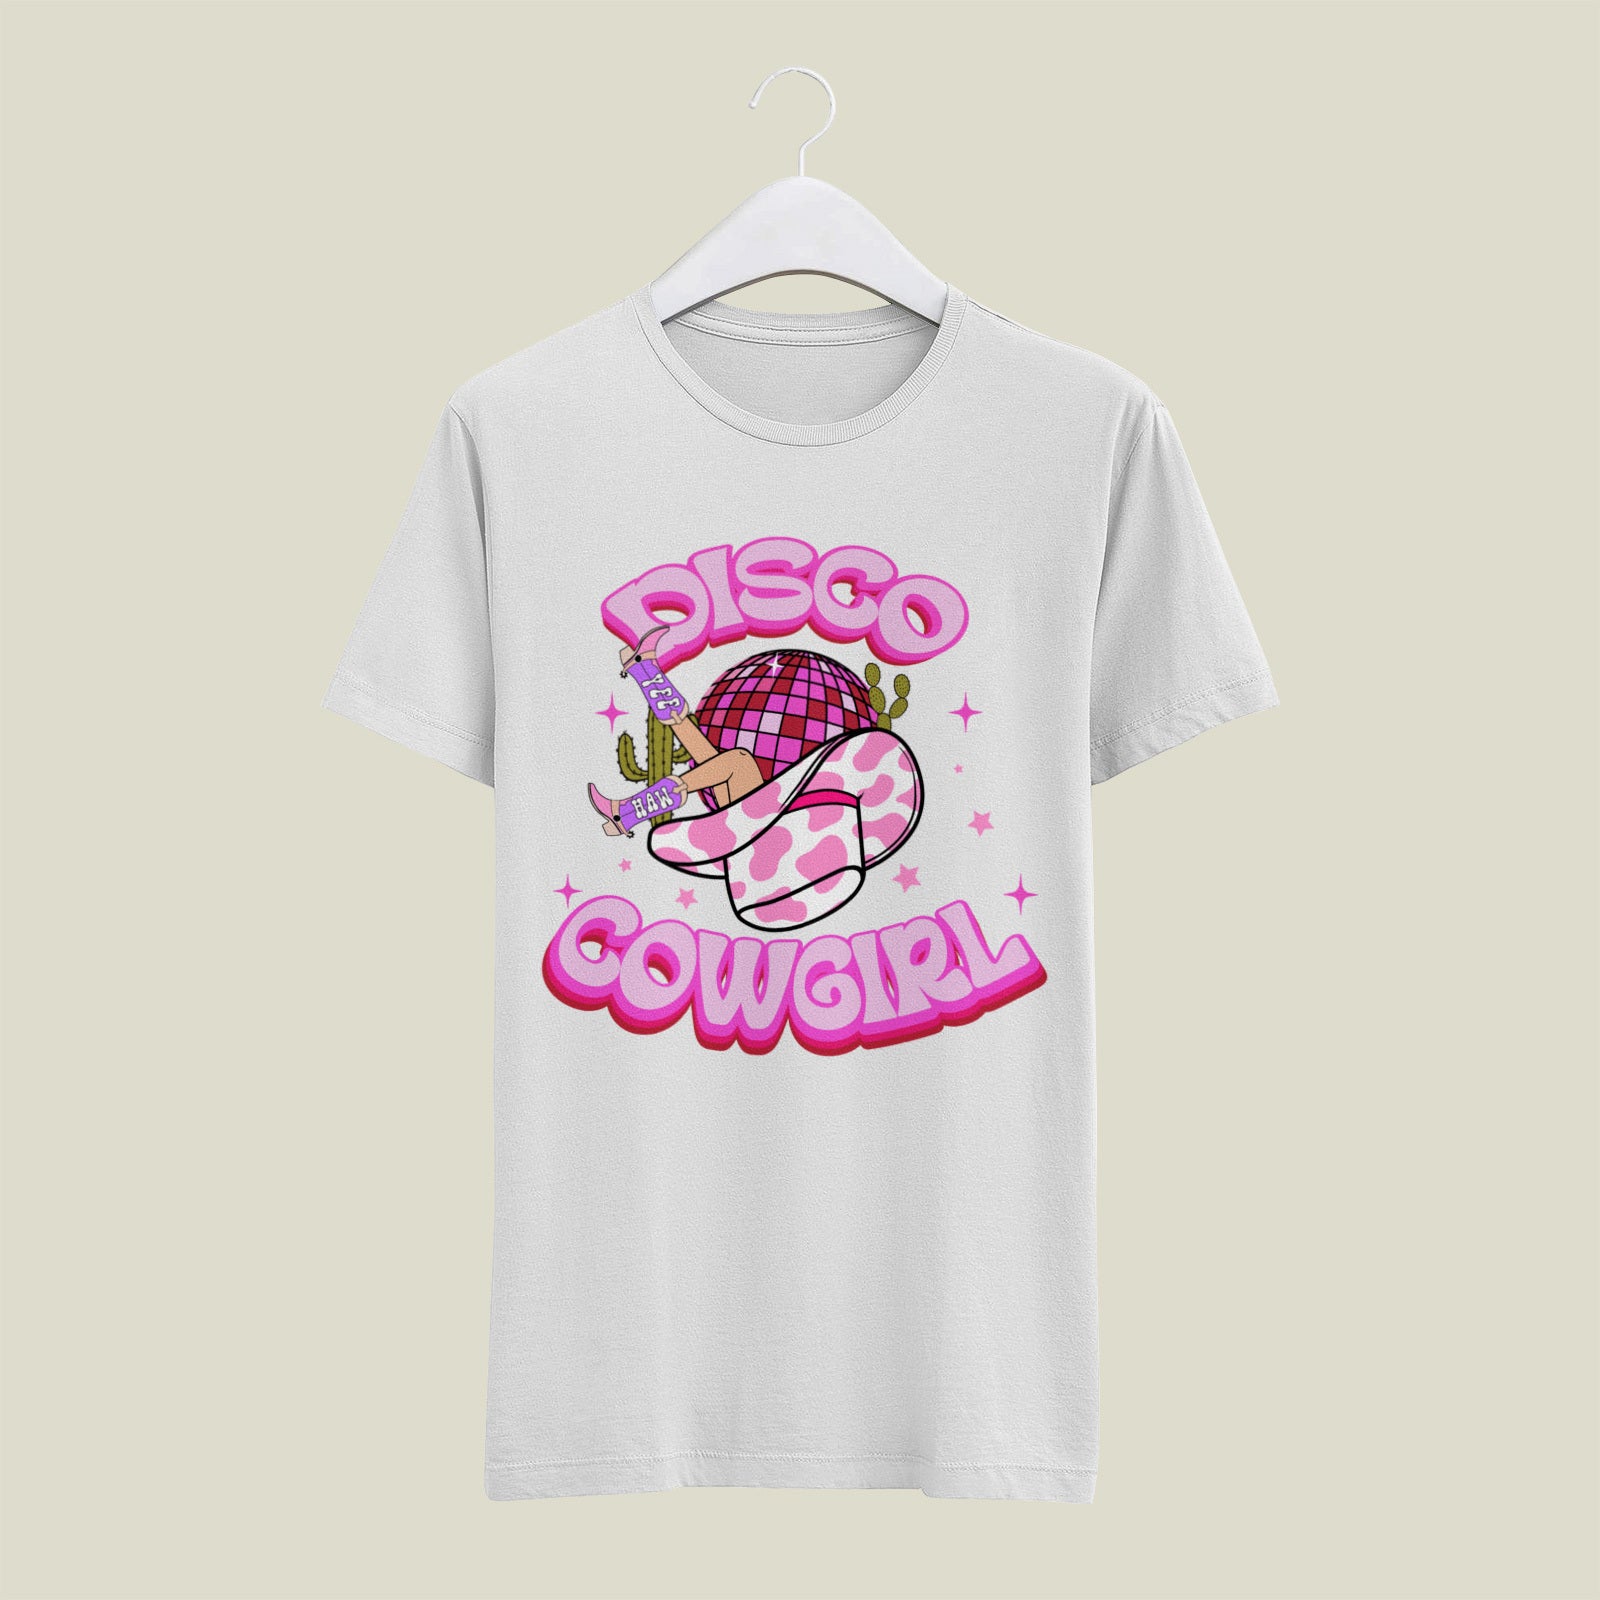 Disco Cowgirl T-Shirt